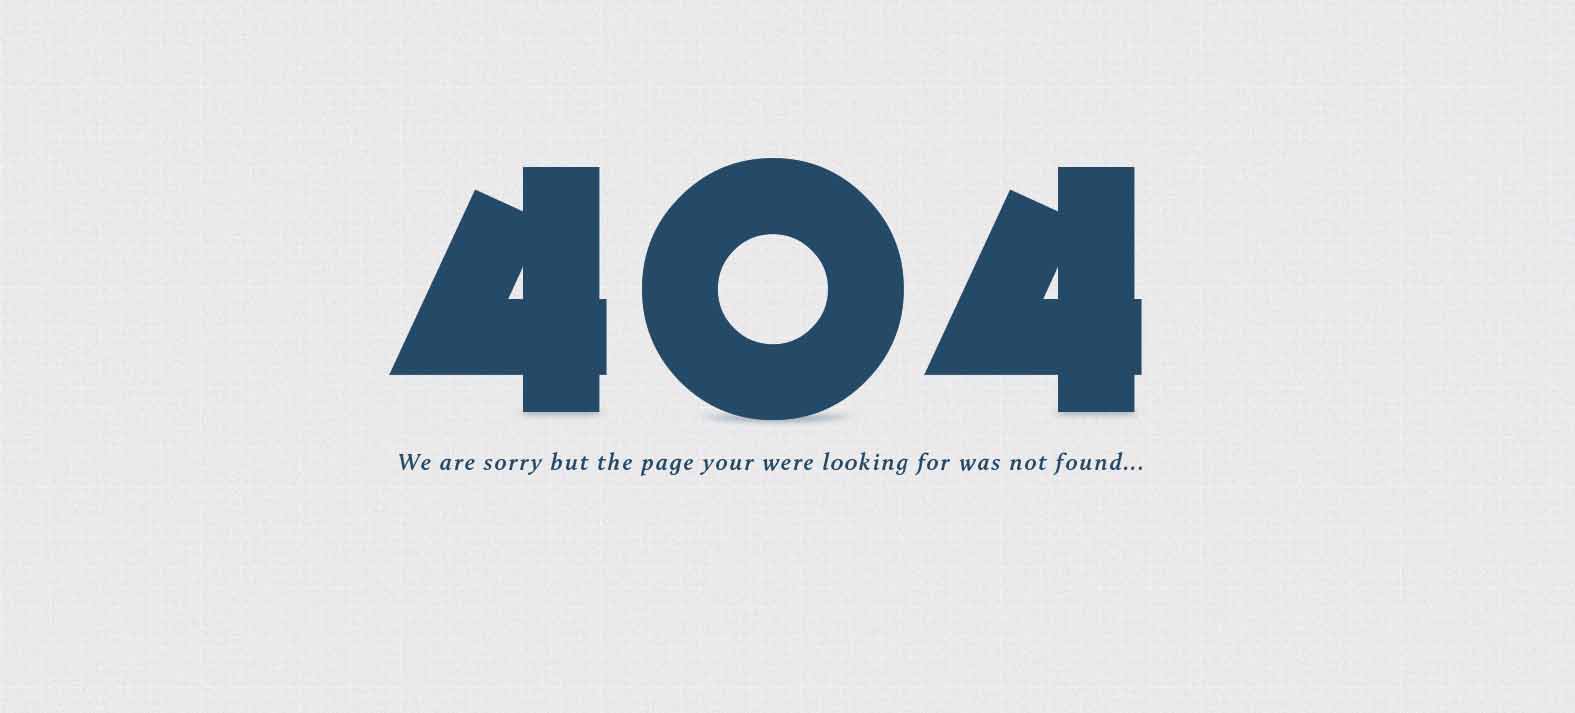 404 error message on a white background.